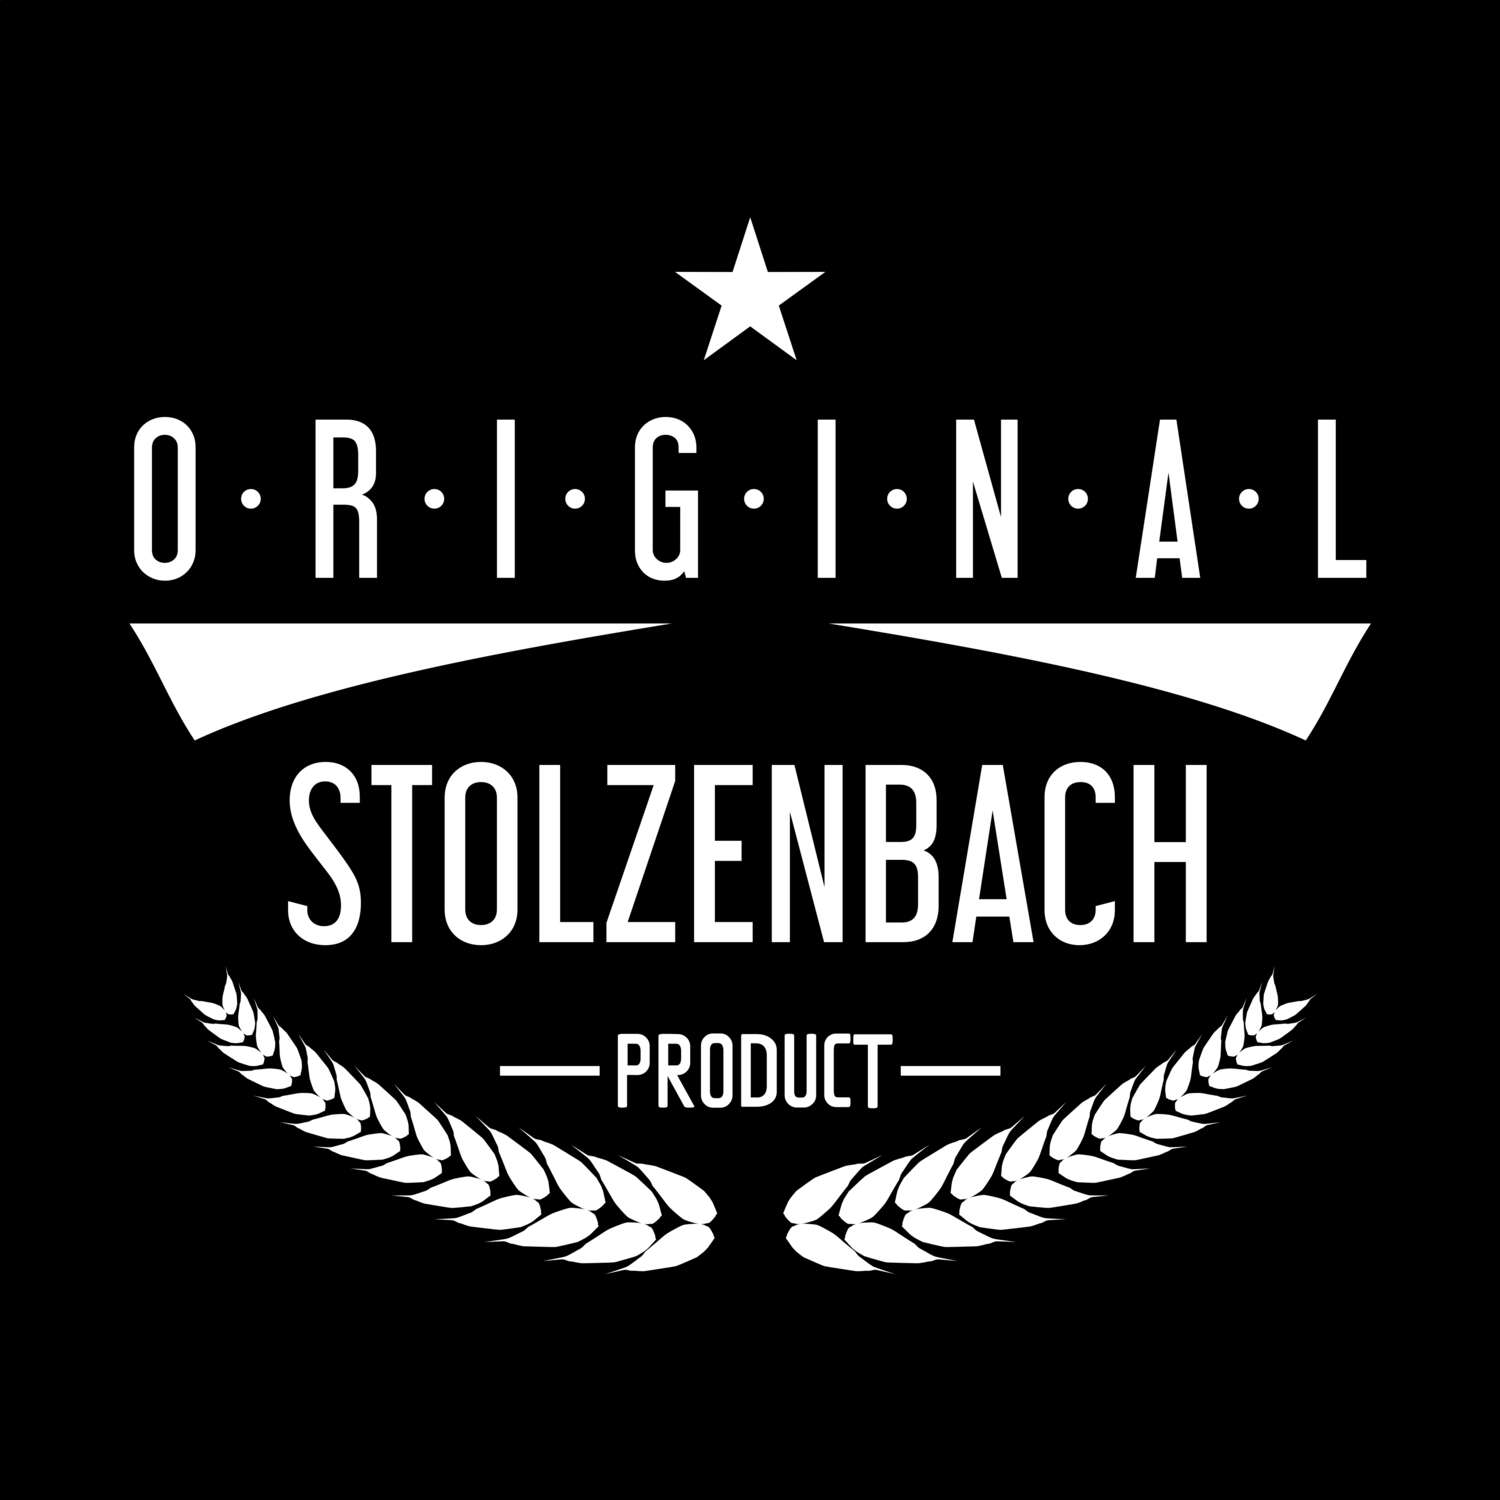 Stolzenbach T-Shirt »Original Product«